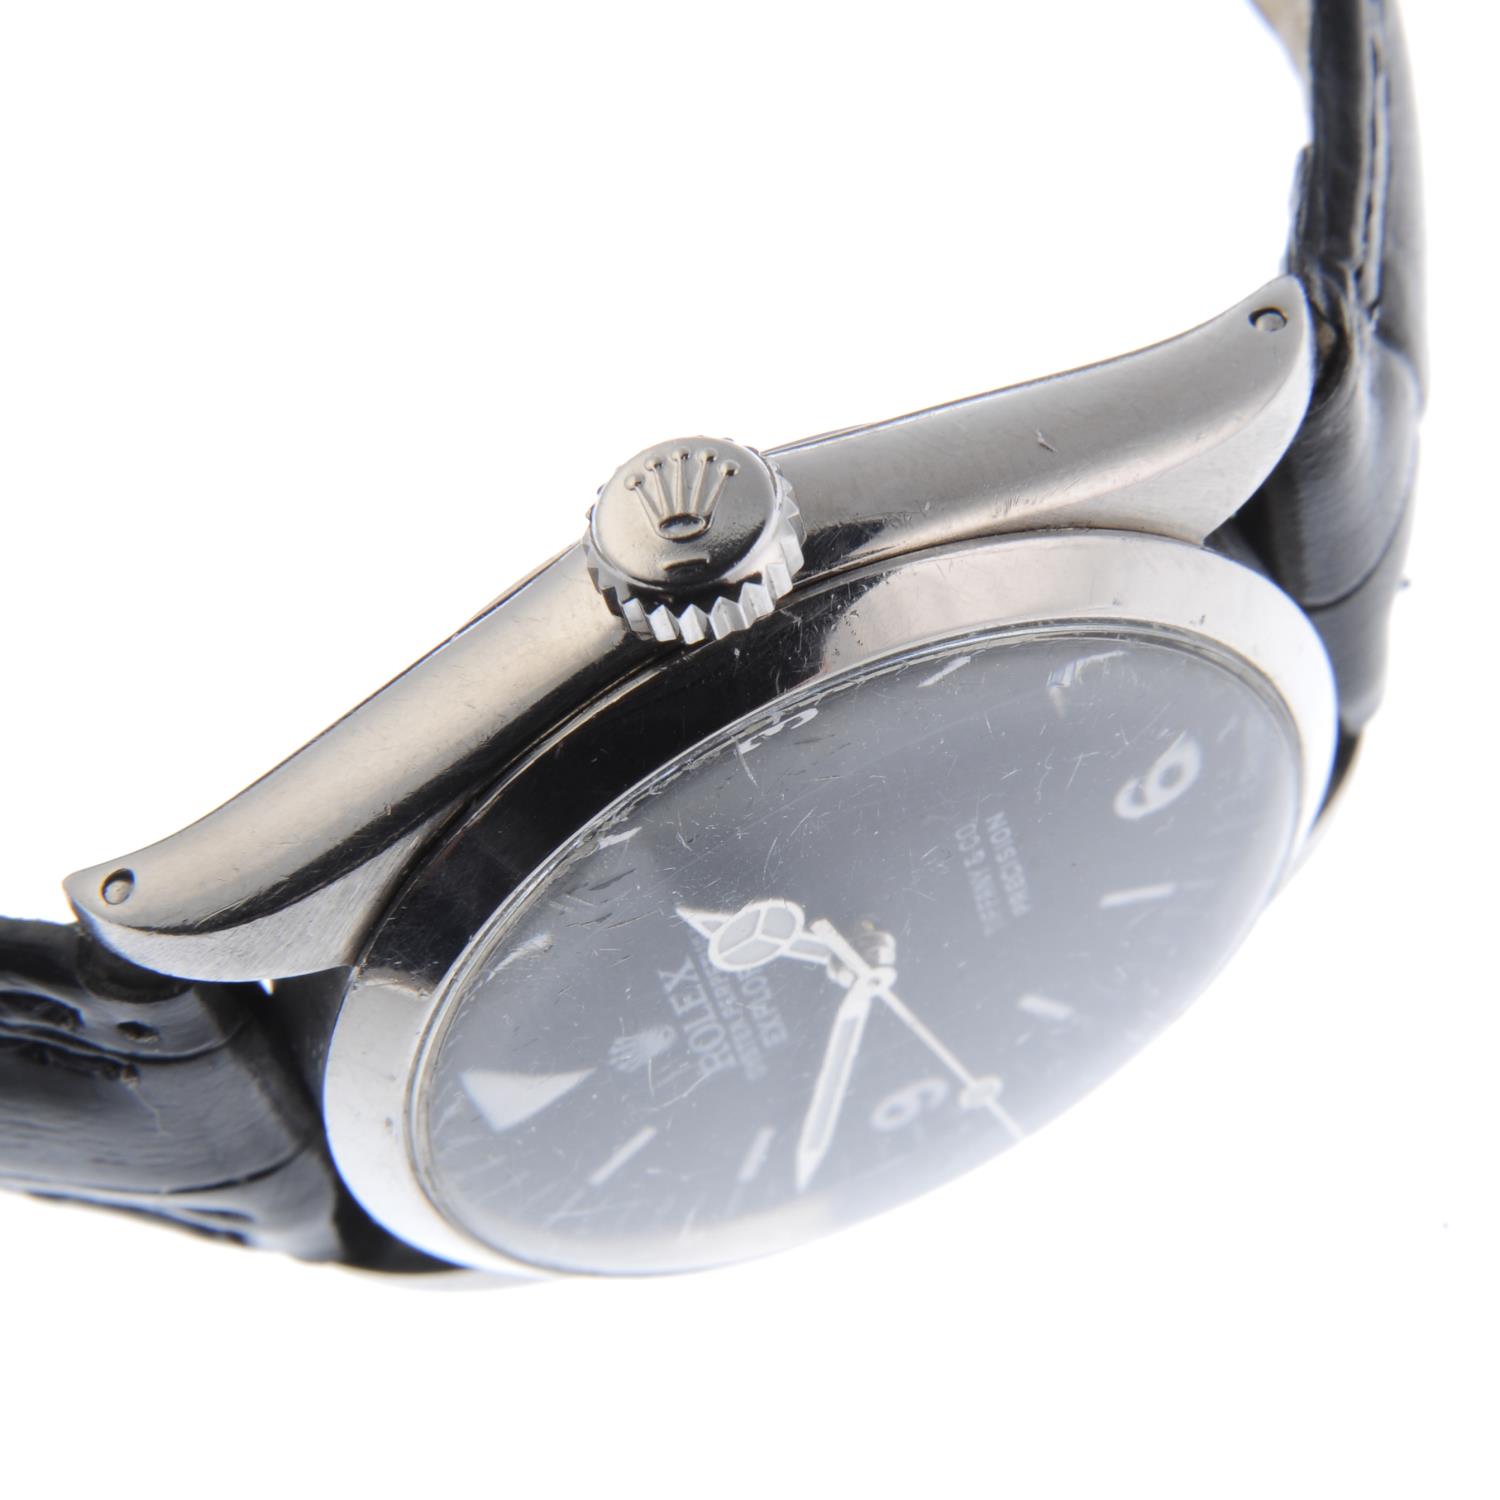 ROLEX - a gentleman's Oyster Perpetual Explorer wrist watch. - Image 3 of 4